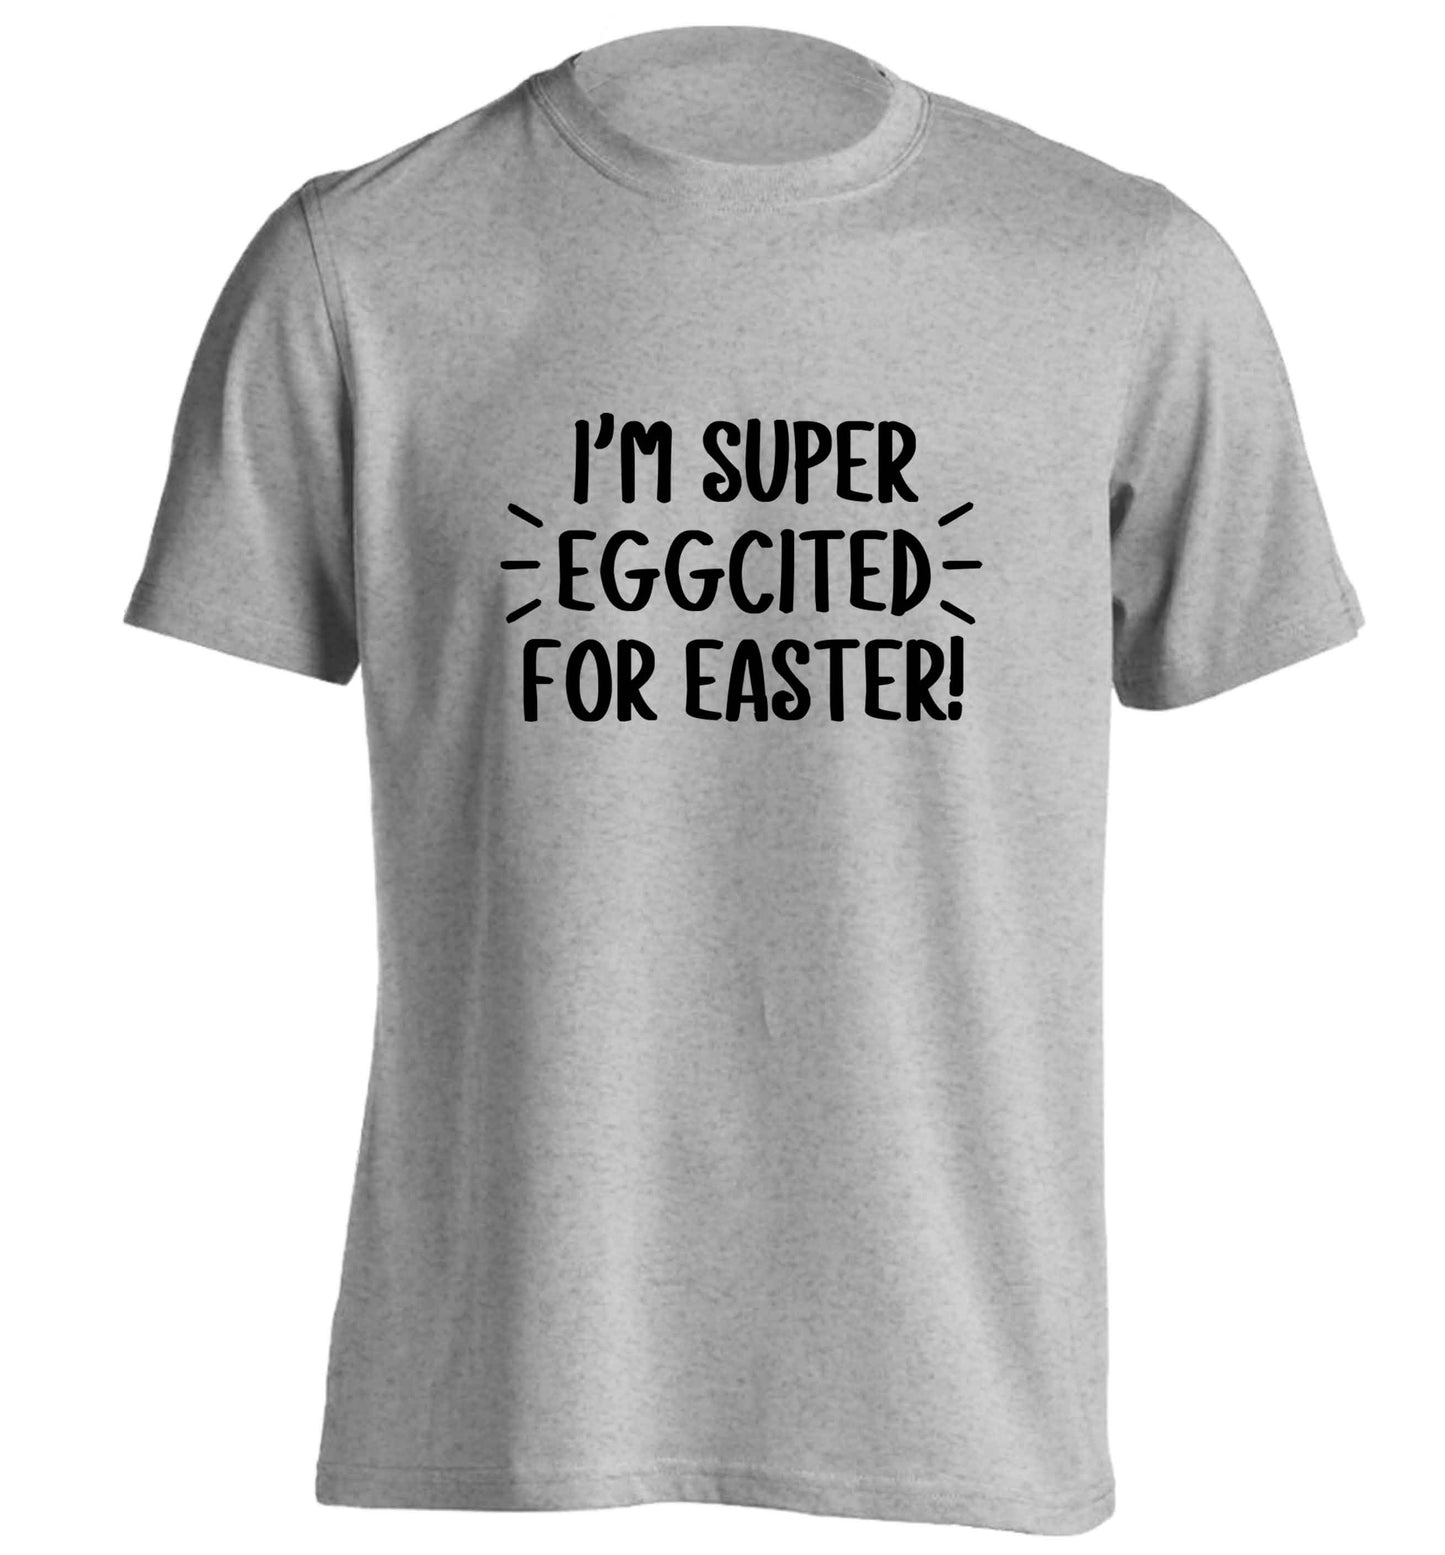 I'm super eggcited for Easter adults unisex grey Tshirt 2XL